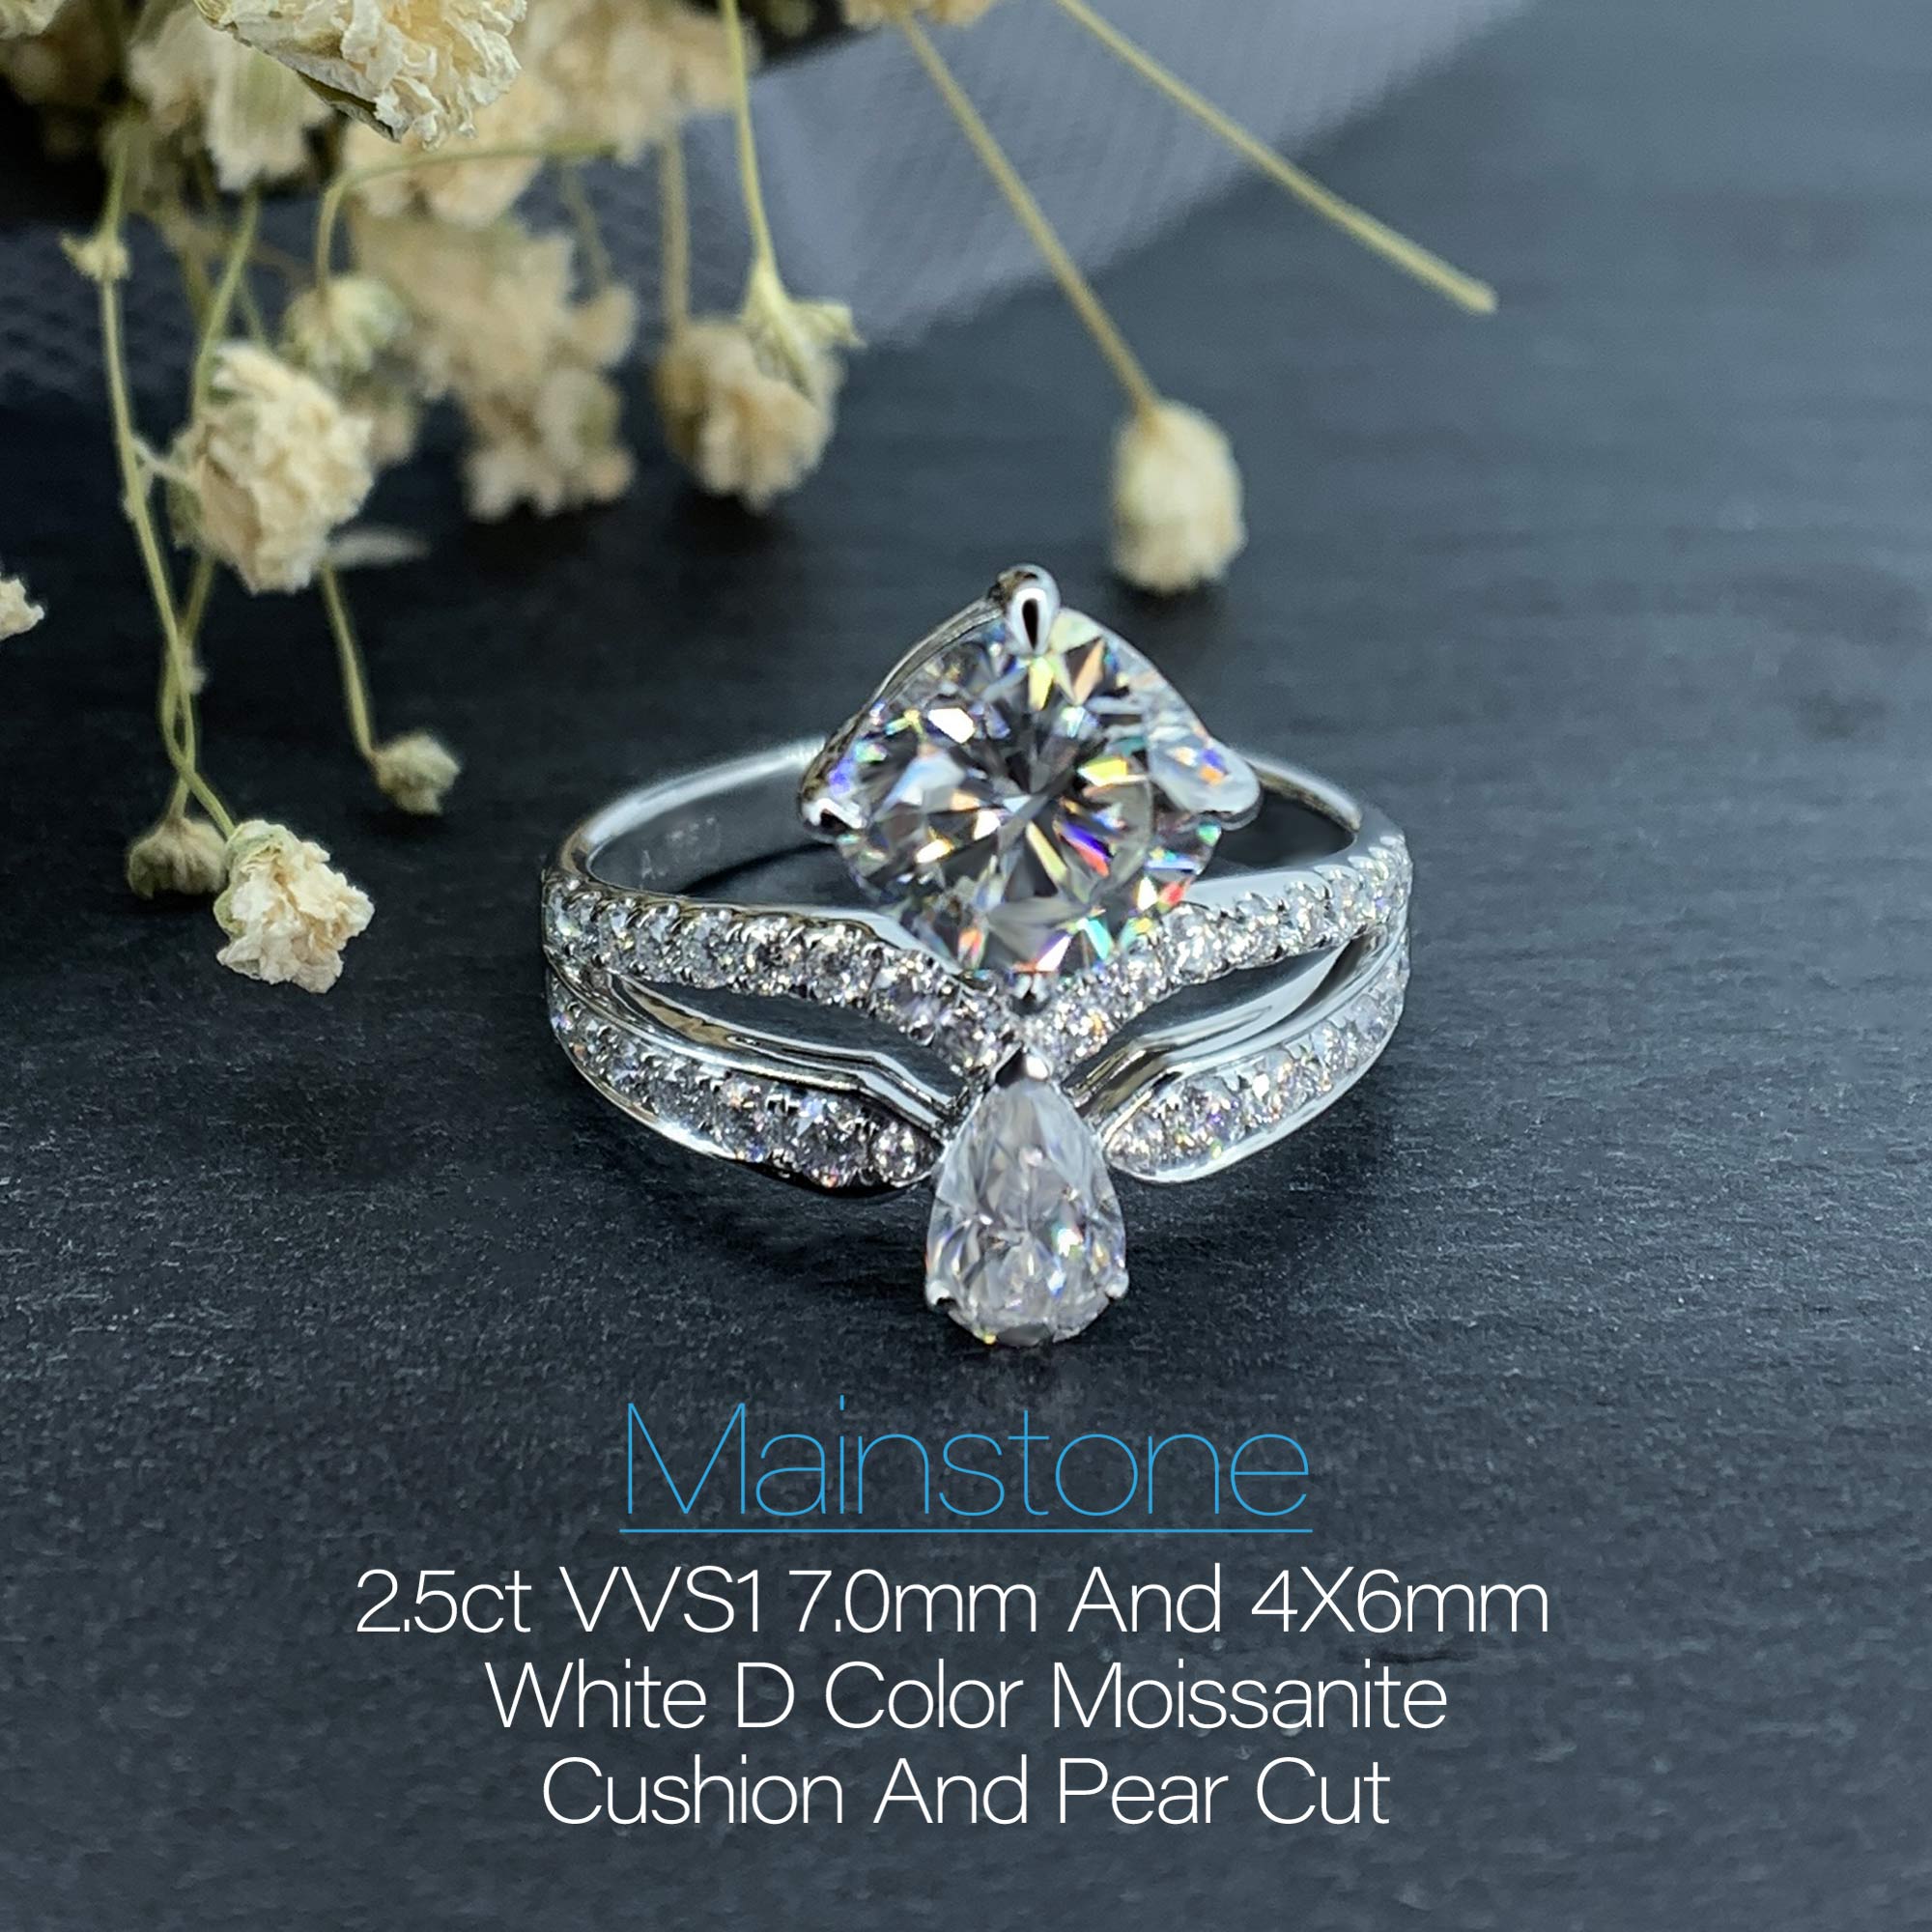 GIGAJEWE Moissanite Customized Jewelry 2.0ct 7mm Cushion Cut White D VVS1 18K White Gold Ring Girlfriend Wife Women Gift